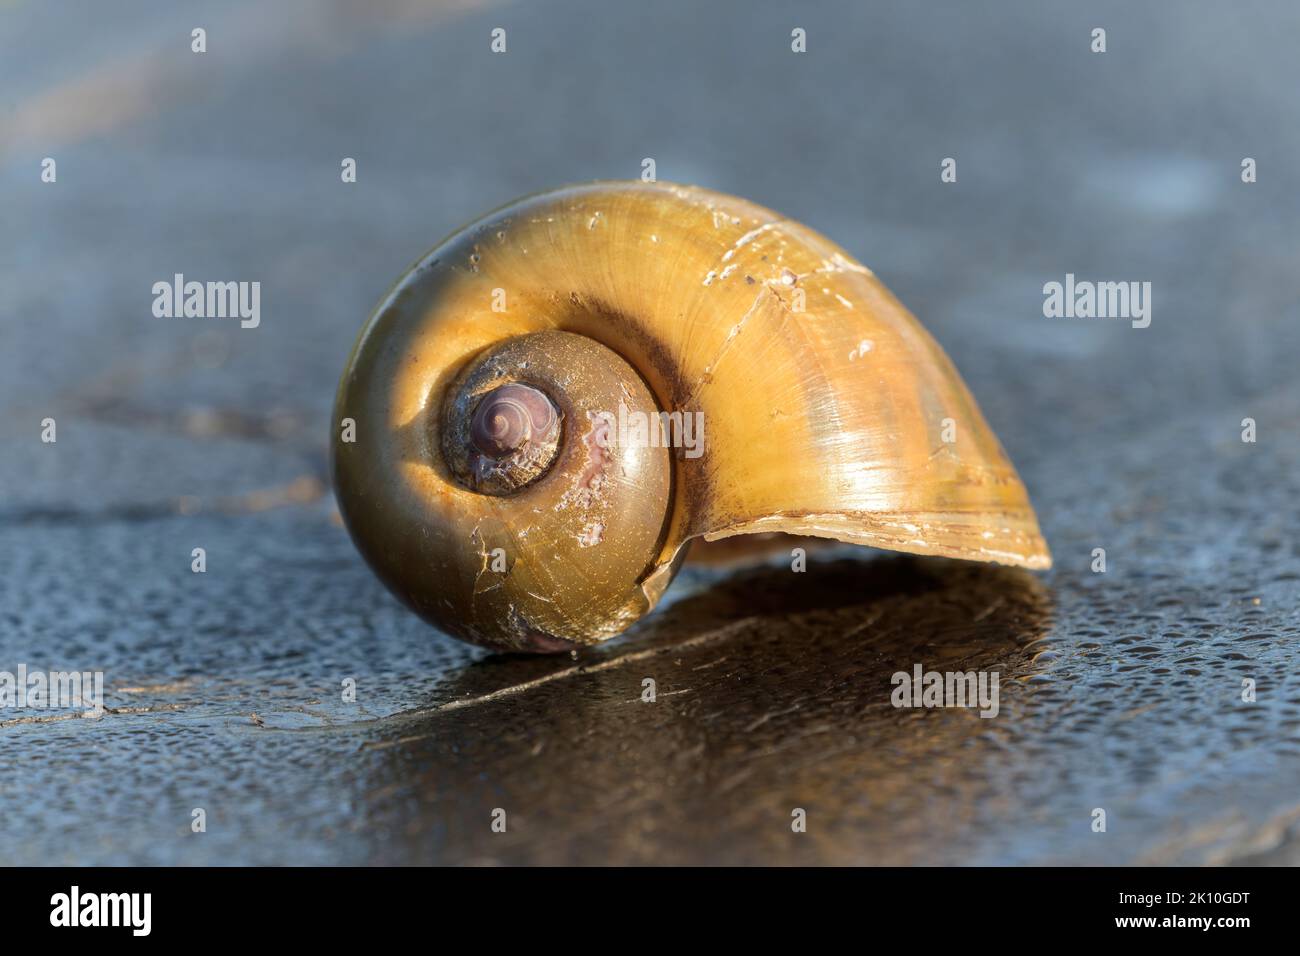 apple snail, Ampullariidae species, shell resting on table, Pantanal, Brazil Stock Photo